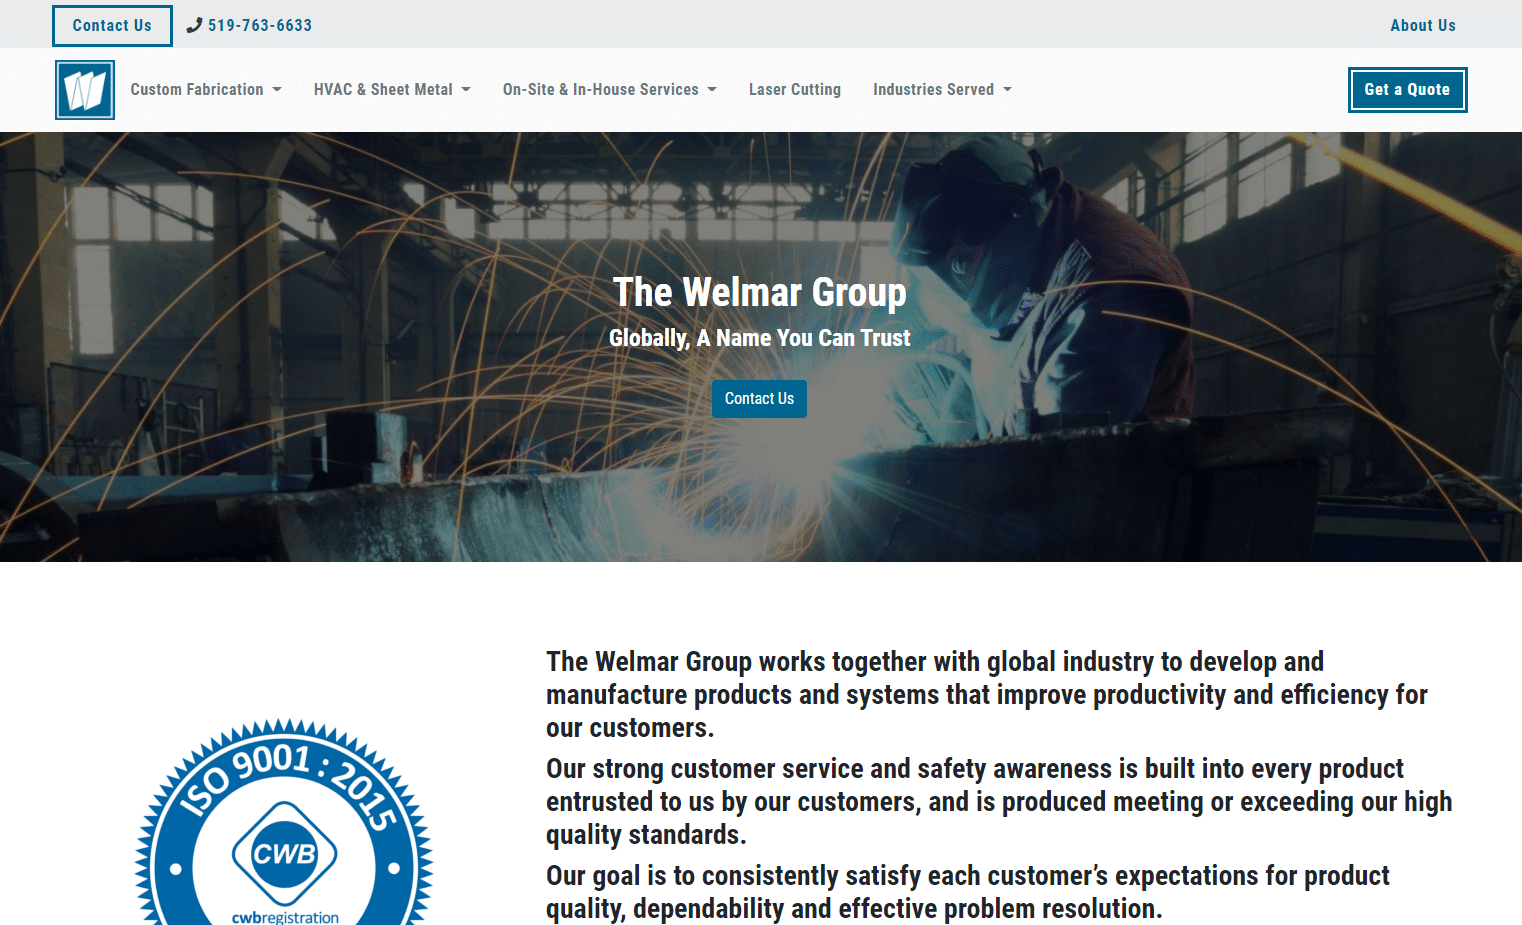 The Welmar Group